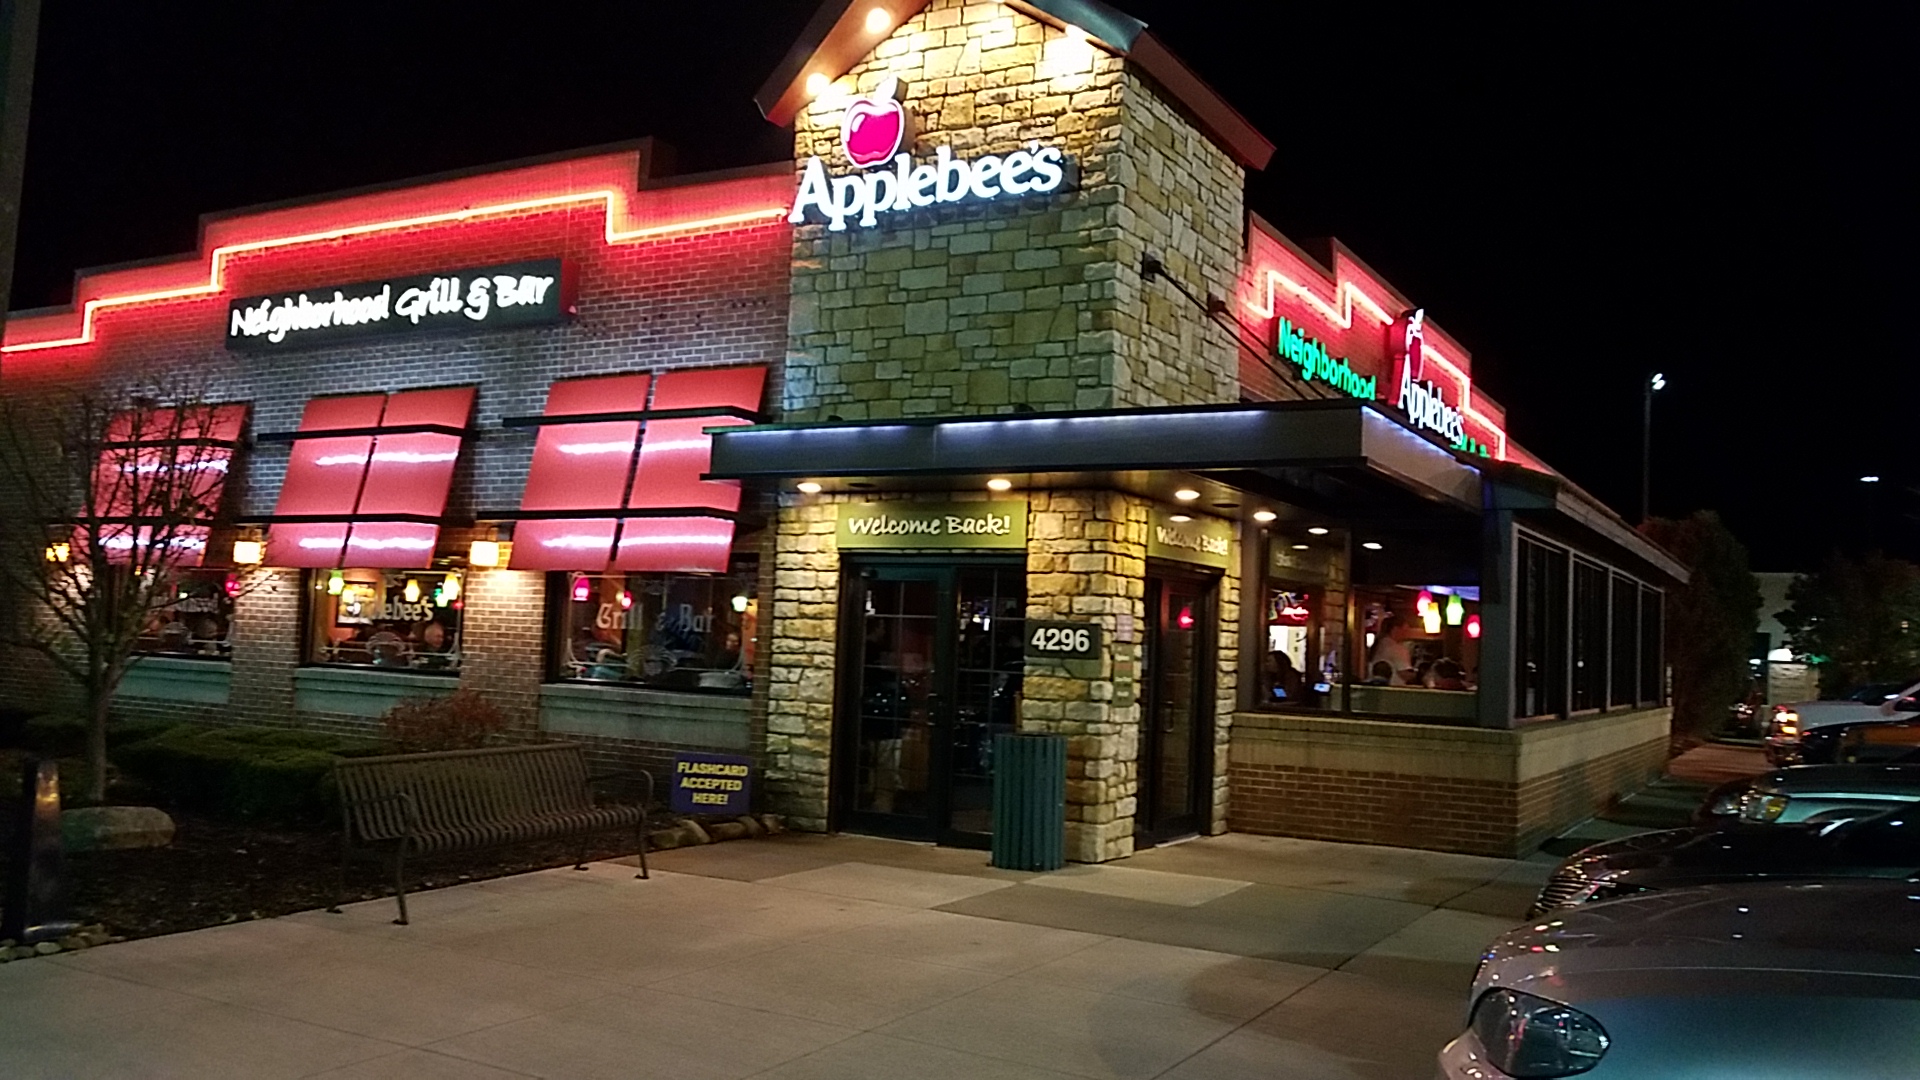 Applebee's Grill + Bar